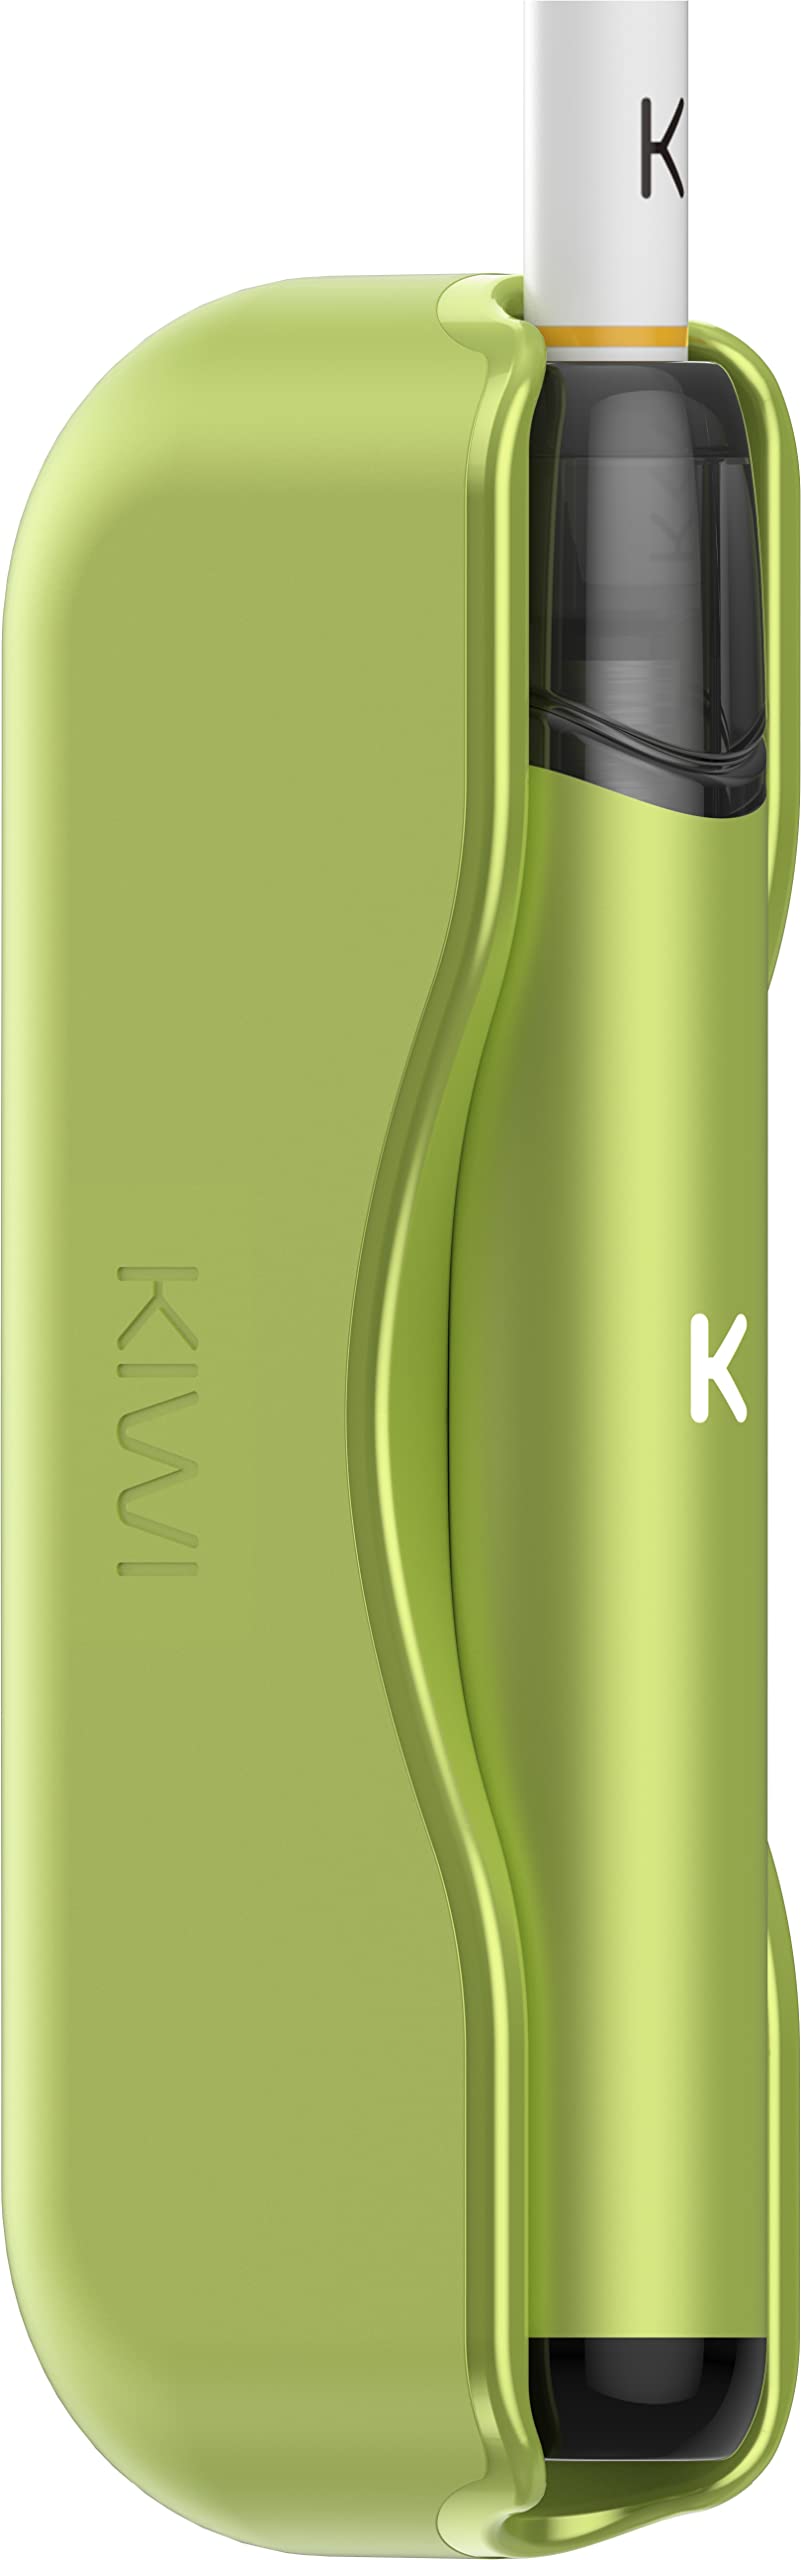 KIWI Starter Kit, Elektronische Zigarette mit Pod System, 400mAh, Powerbank 1450 mAh, 1,8 ml, Farbe Fury Green, kein Nikotin, kein E-Liquid